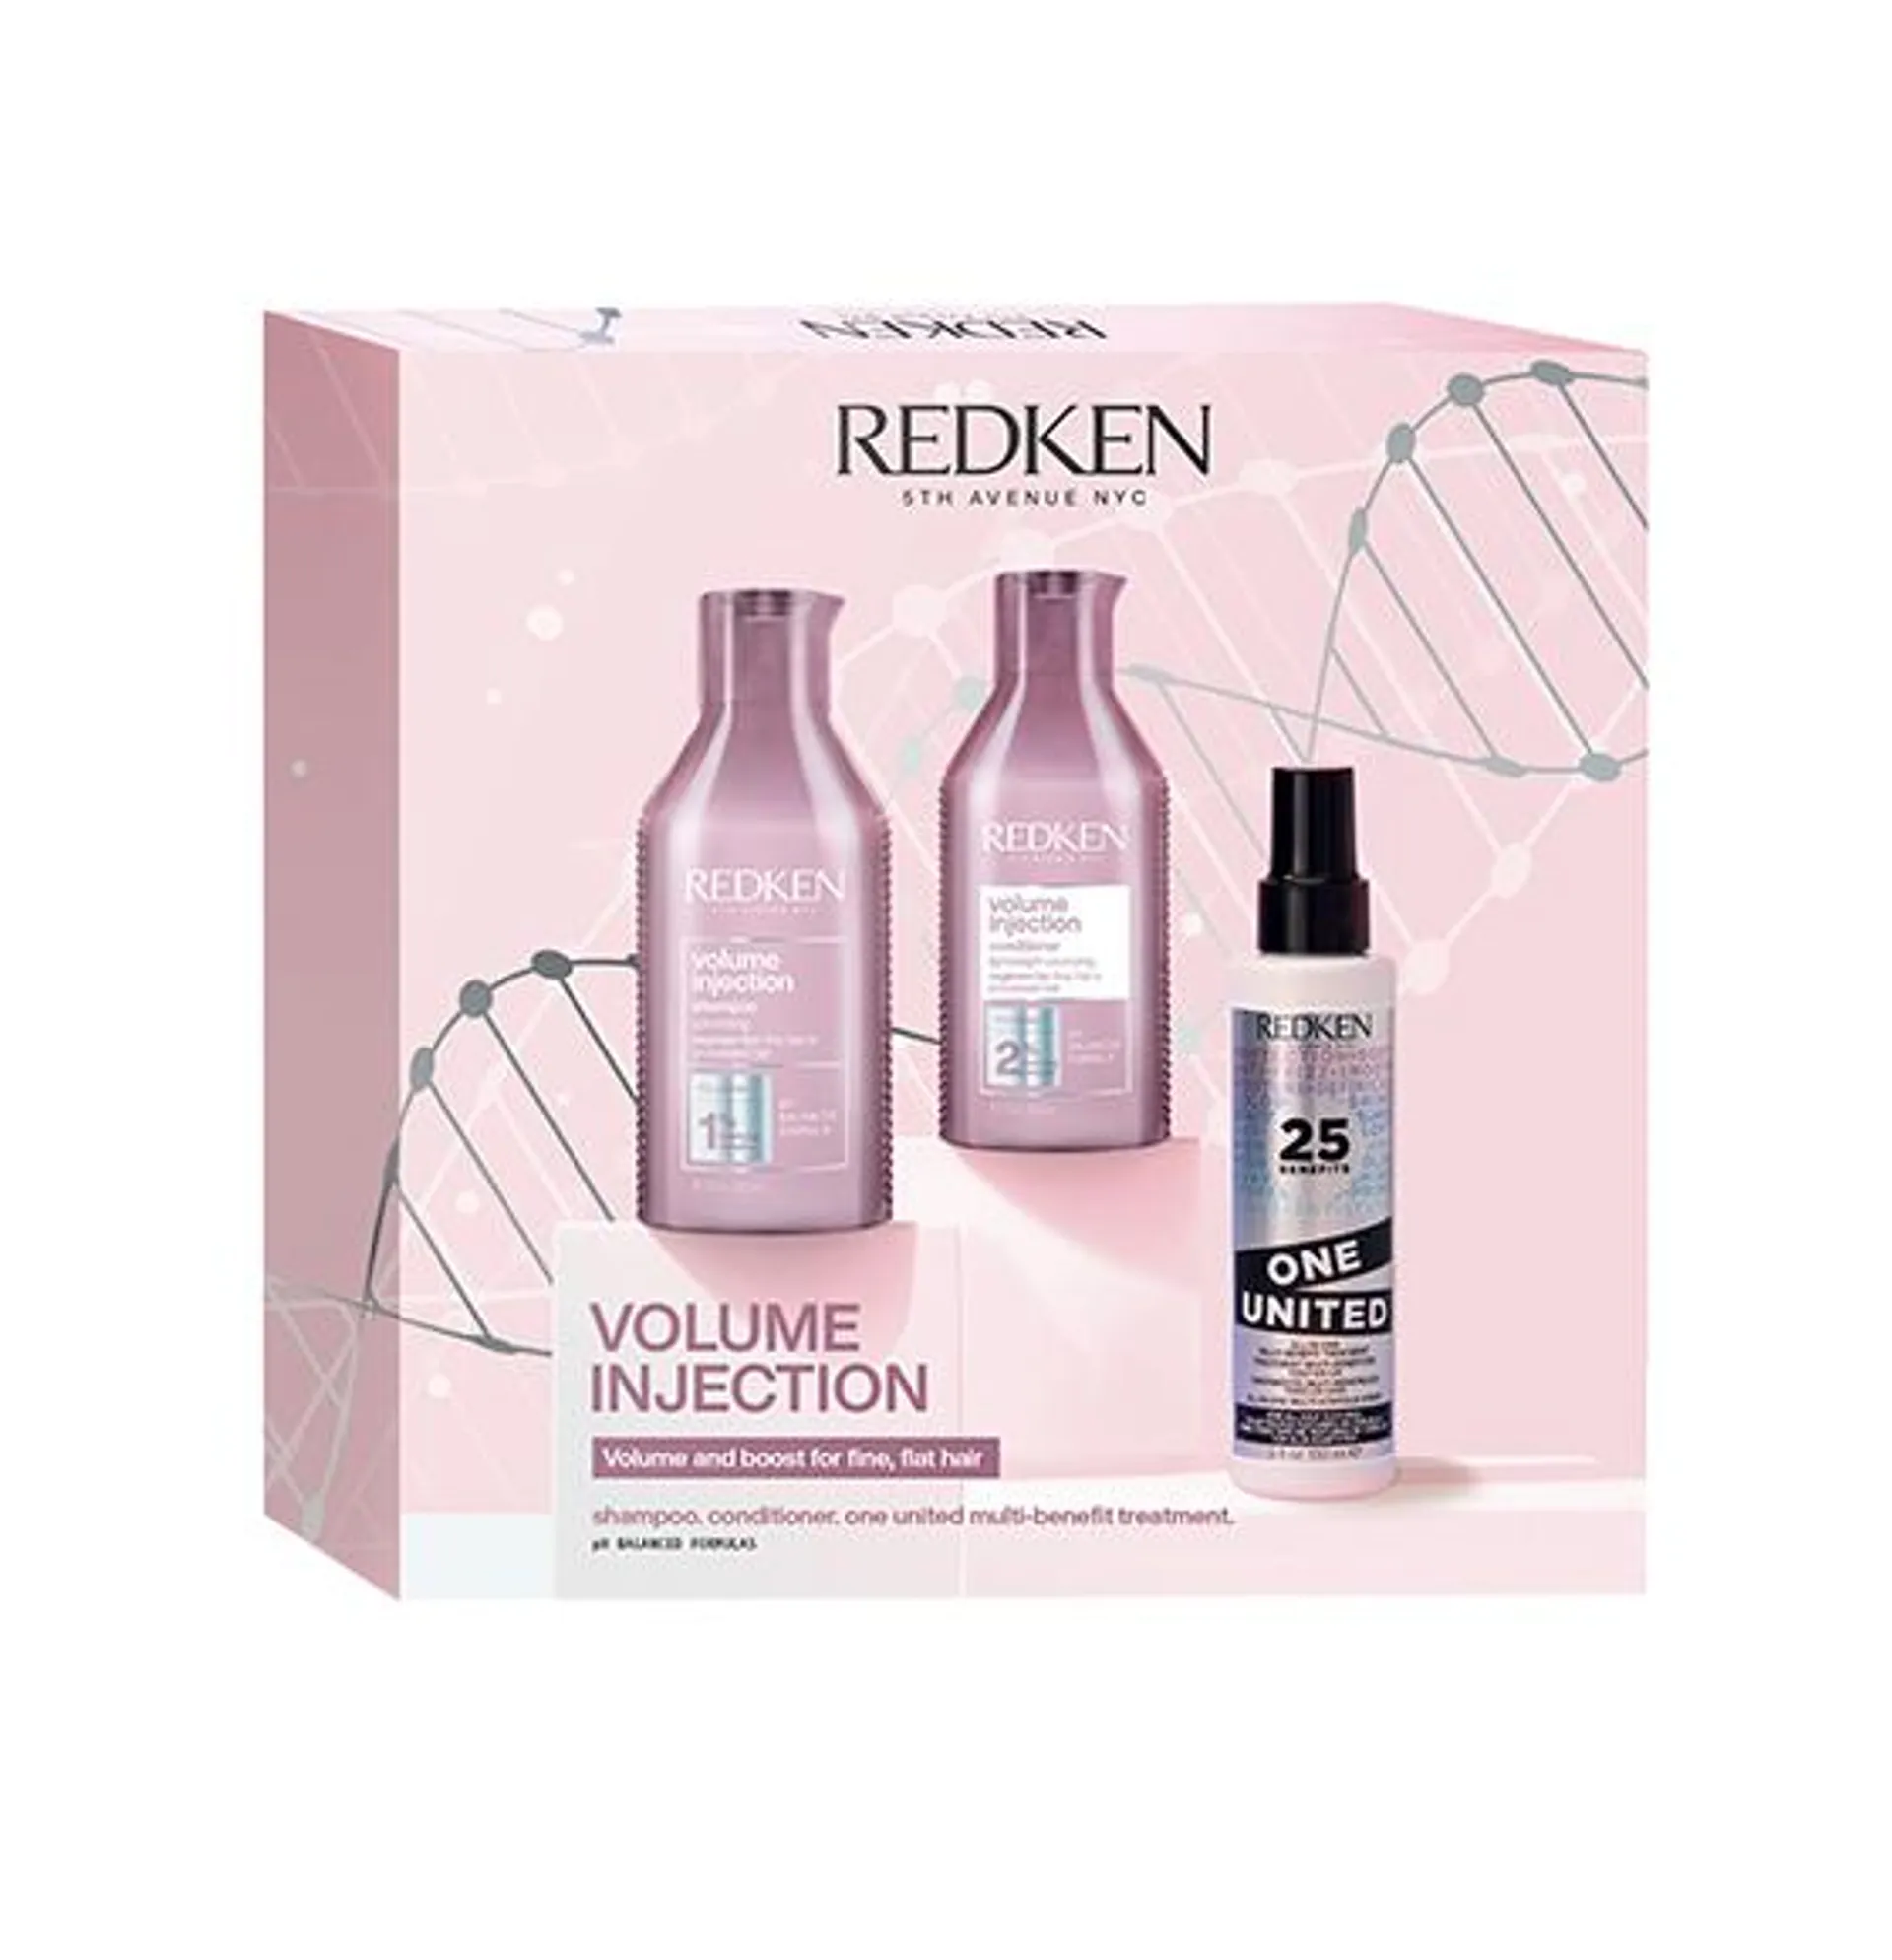 RedKen Volume Injection Gift Set